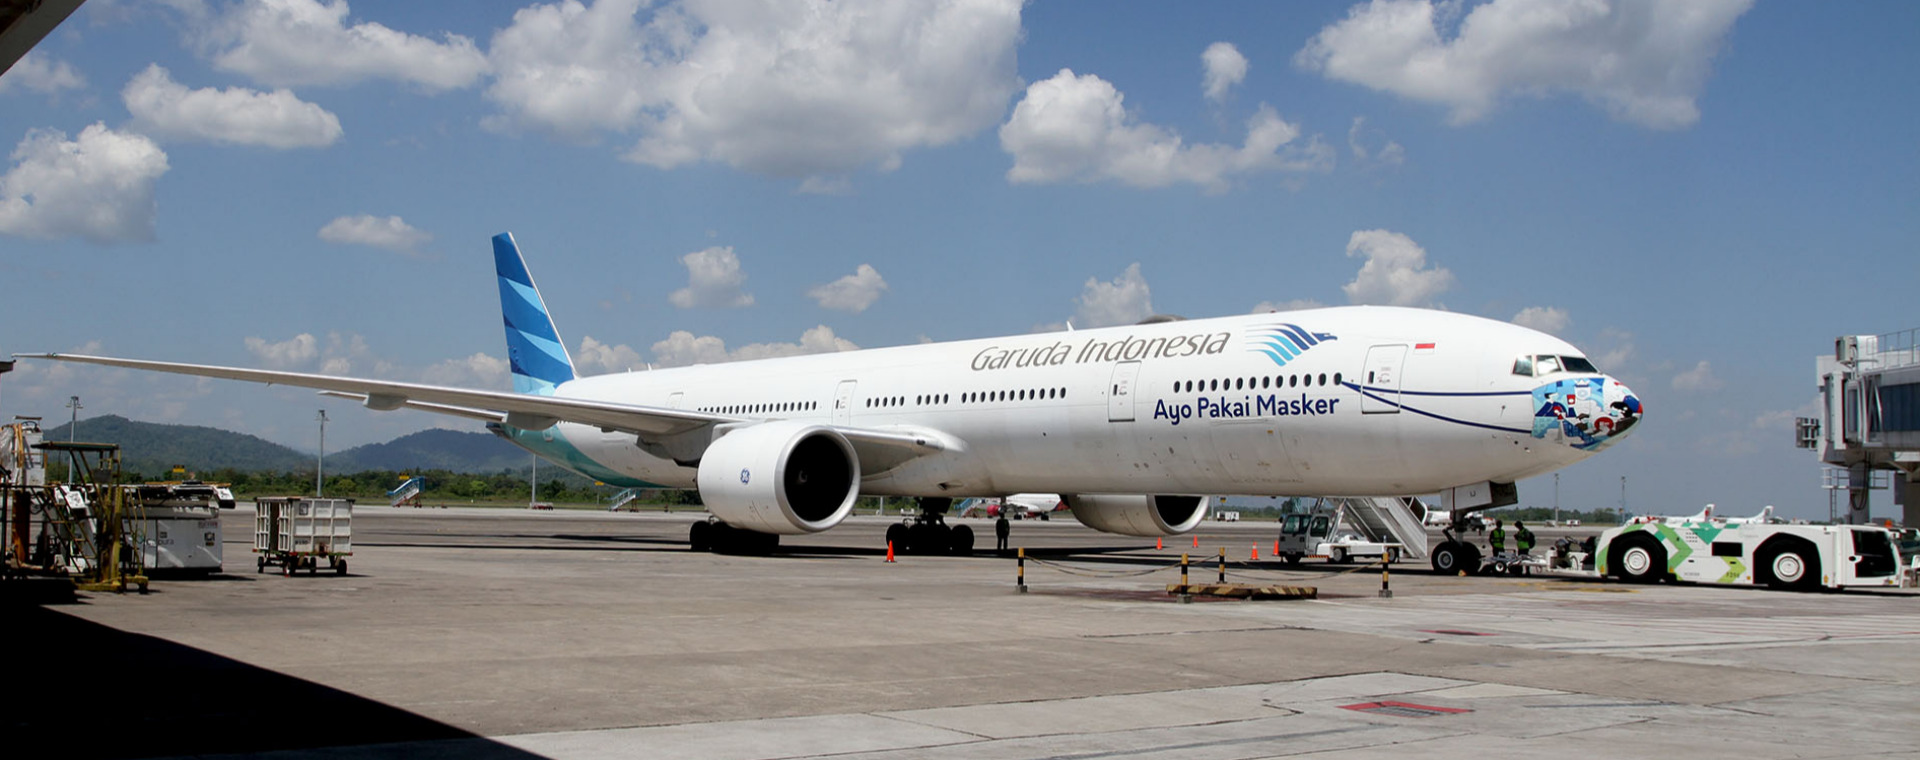  Haji 2024: Terbang ke Madinah, Garuda Indonesia Dapat Rapor Merah?